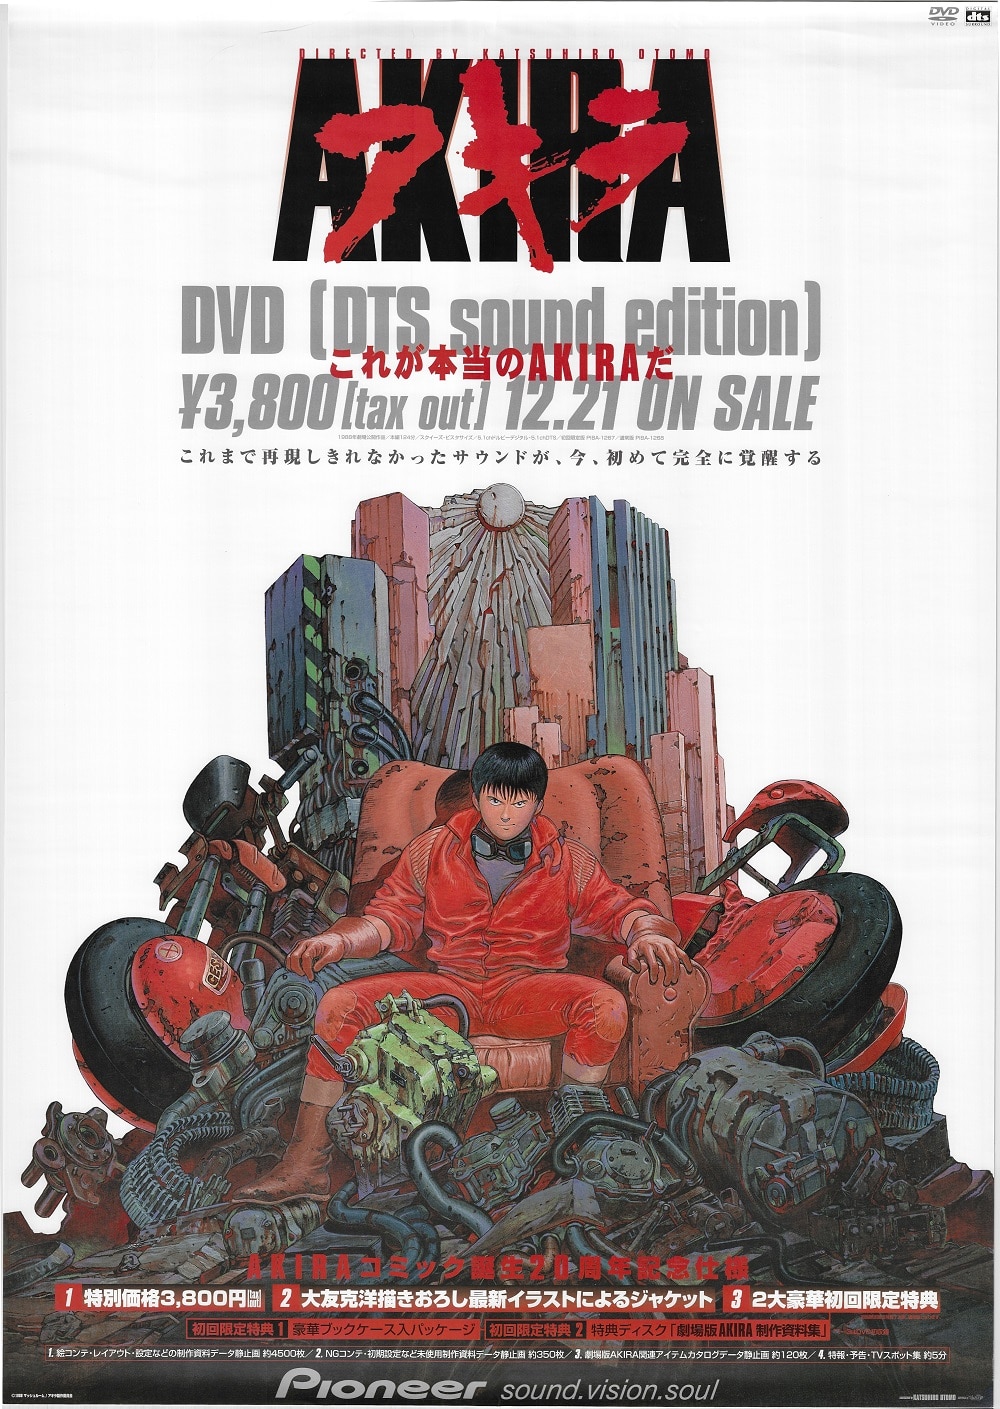 Pioneer Promotional Item Katsuhiro Otomo Akira Akira Dvd Dts Sound Edition B2 Poster Mandarake Online Shop